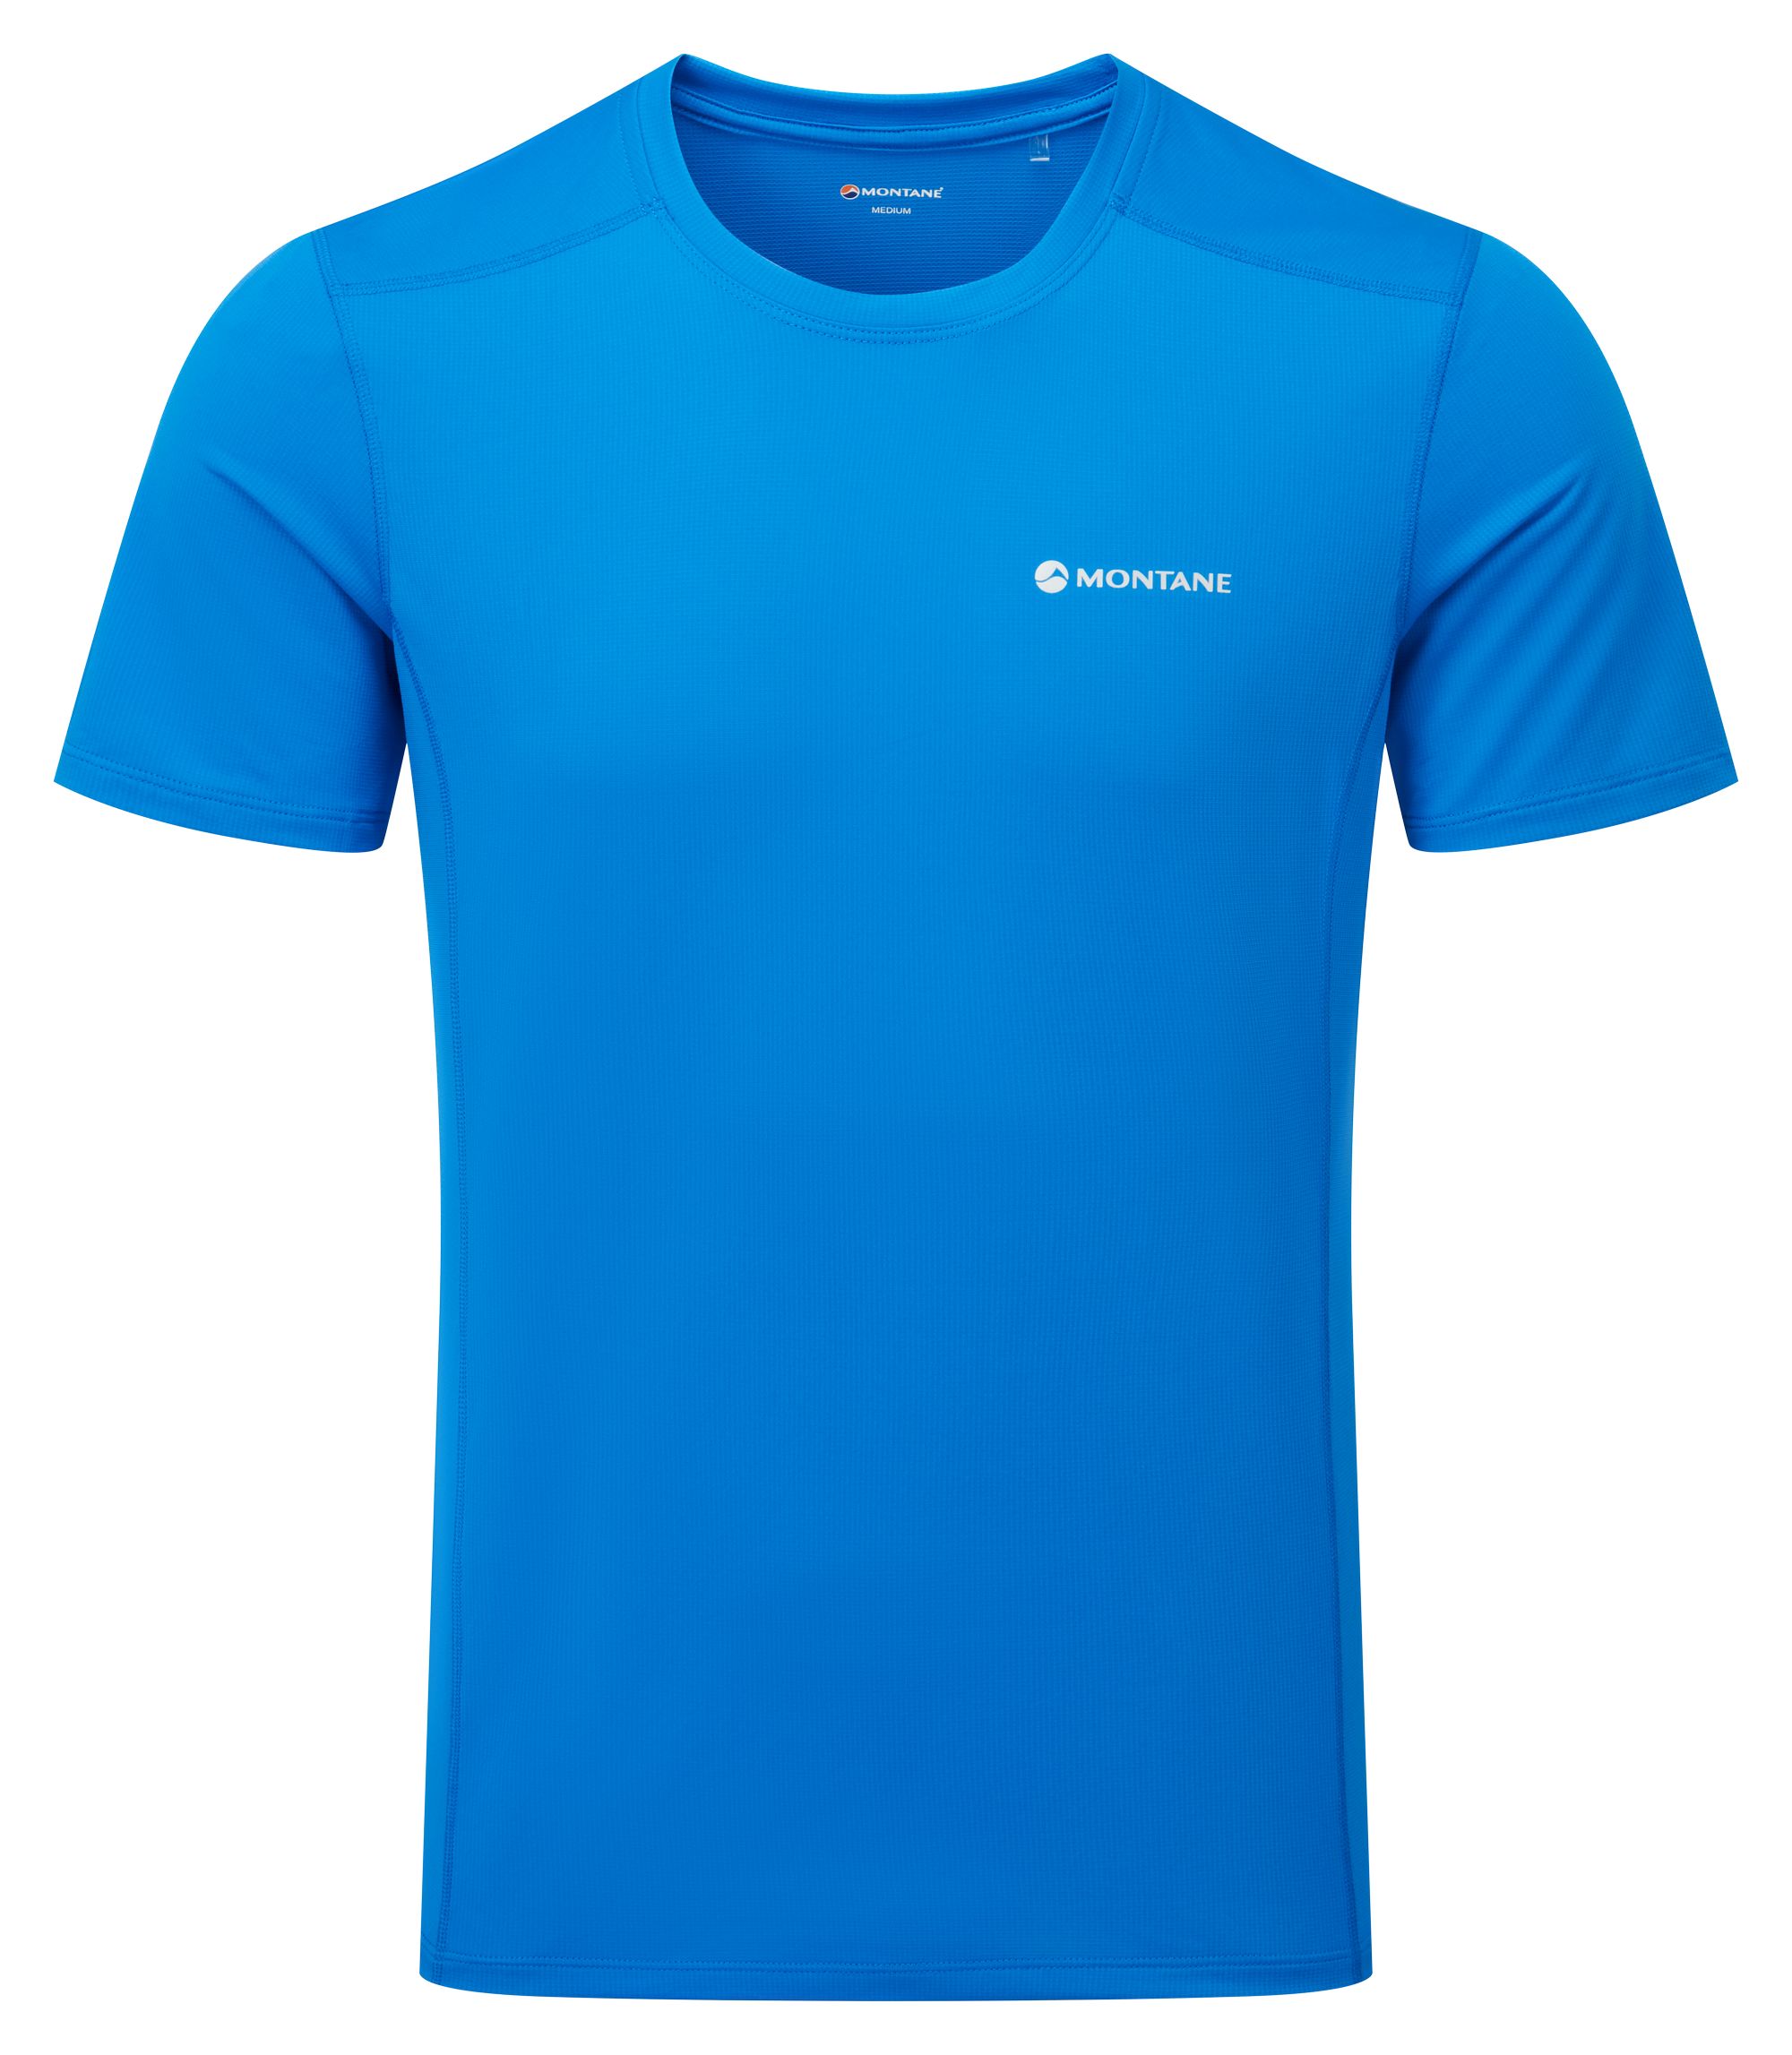 Montane DART LITE T-SHIRT-ELECTRIC BLUE-L pánské tričko modré